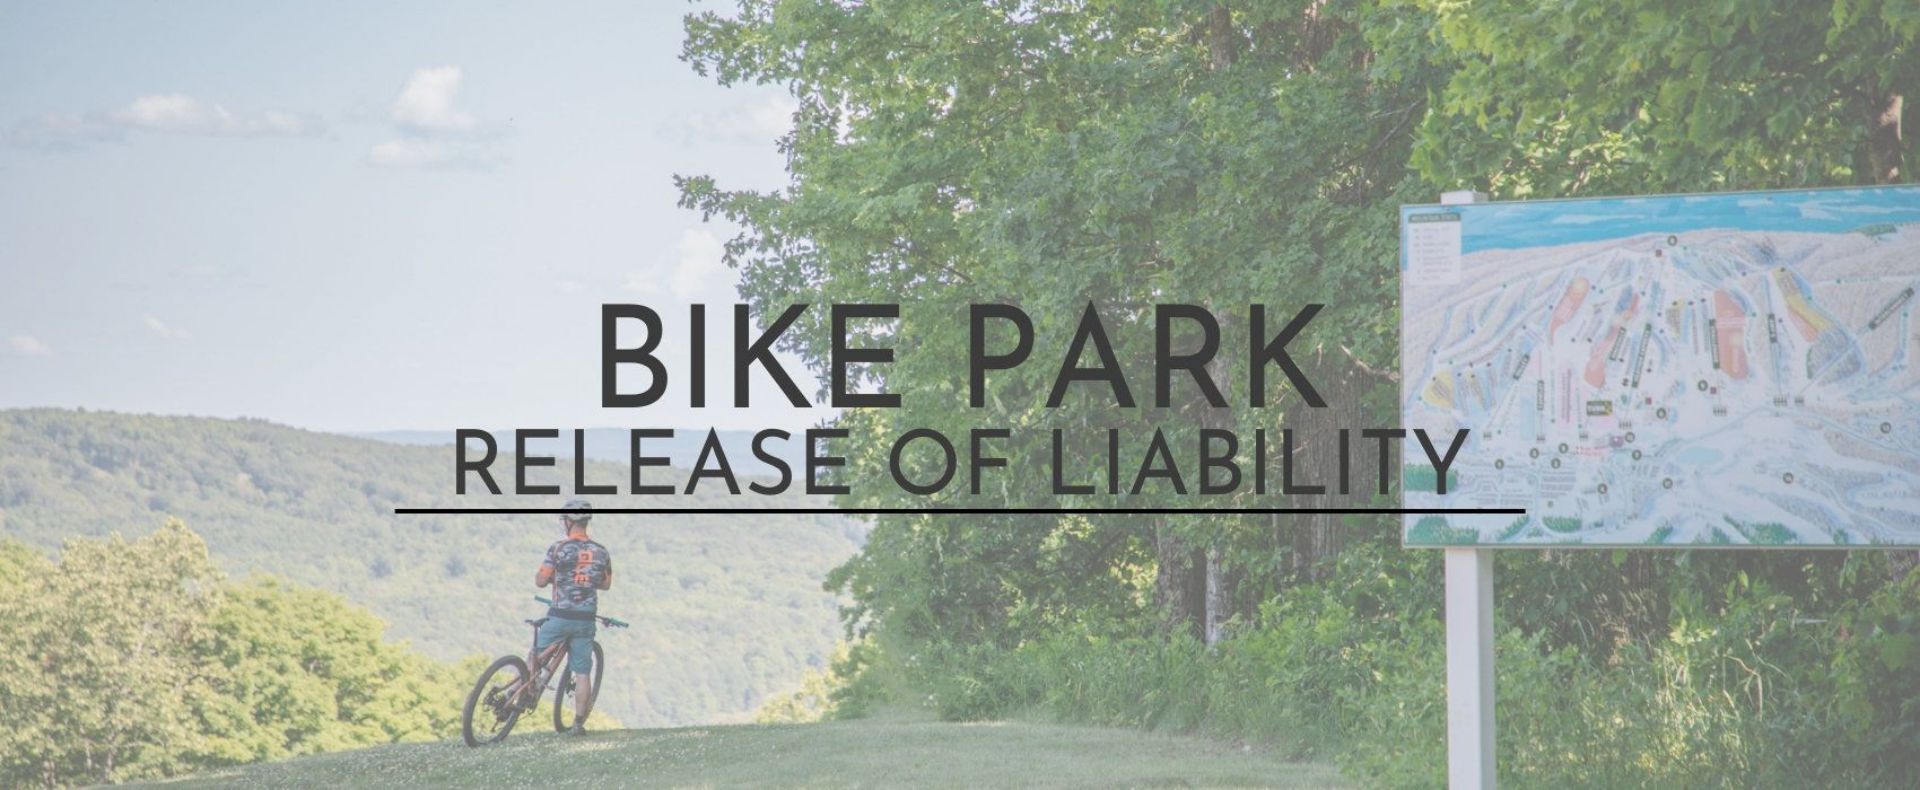 Bike Park Release of Liability